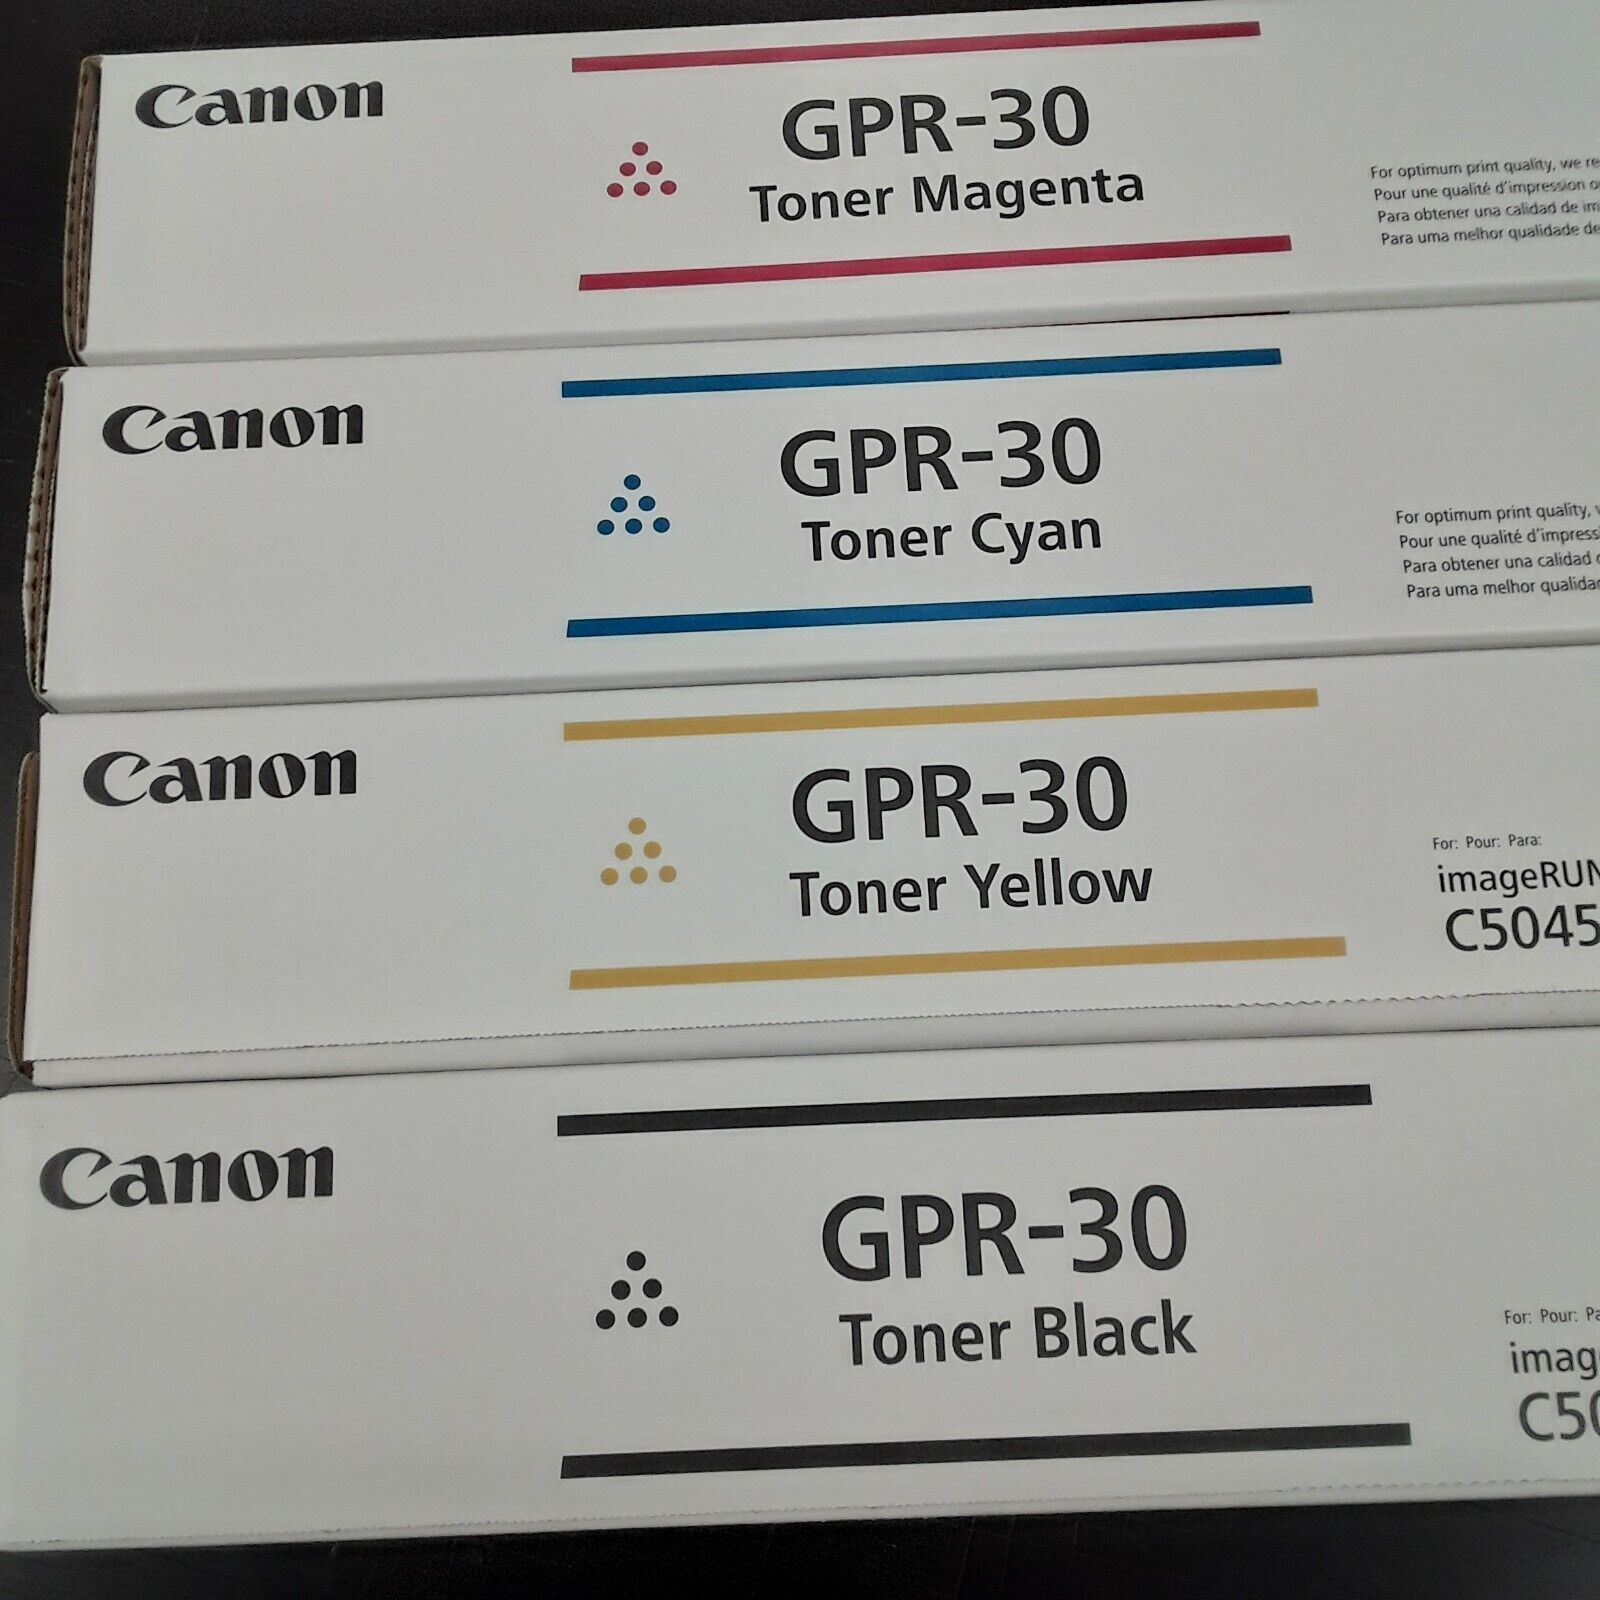 NEW Genuine Canon GPR-30 Toner Cyan Magenta Yellow Black C5045 C5051 C5250 C5255